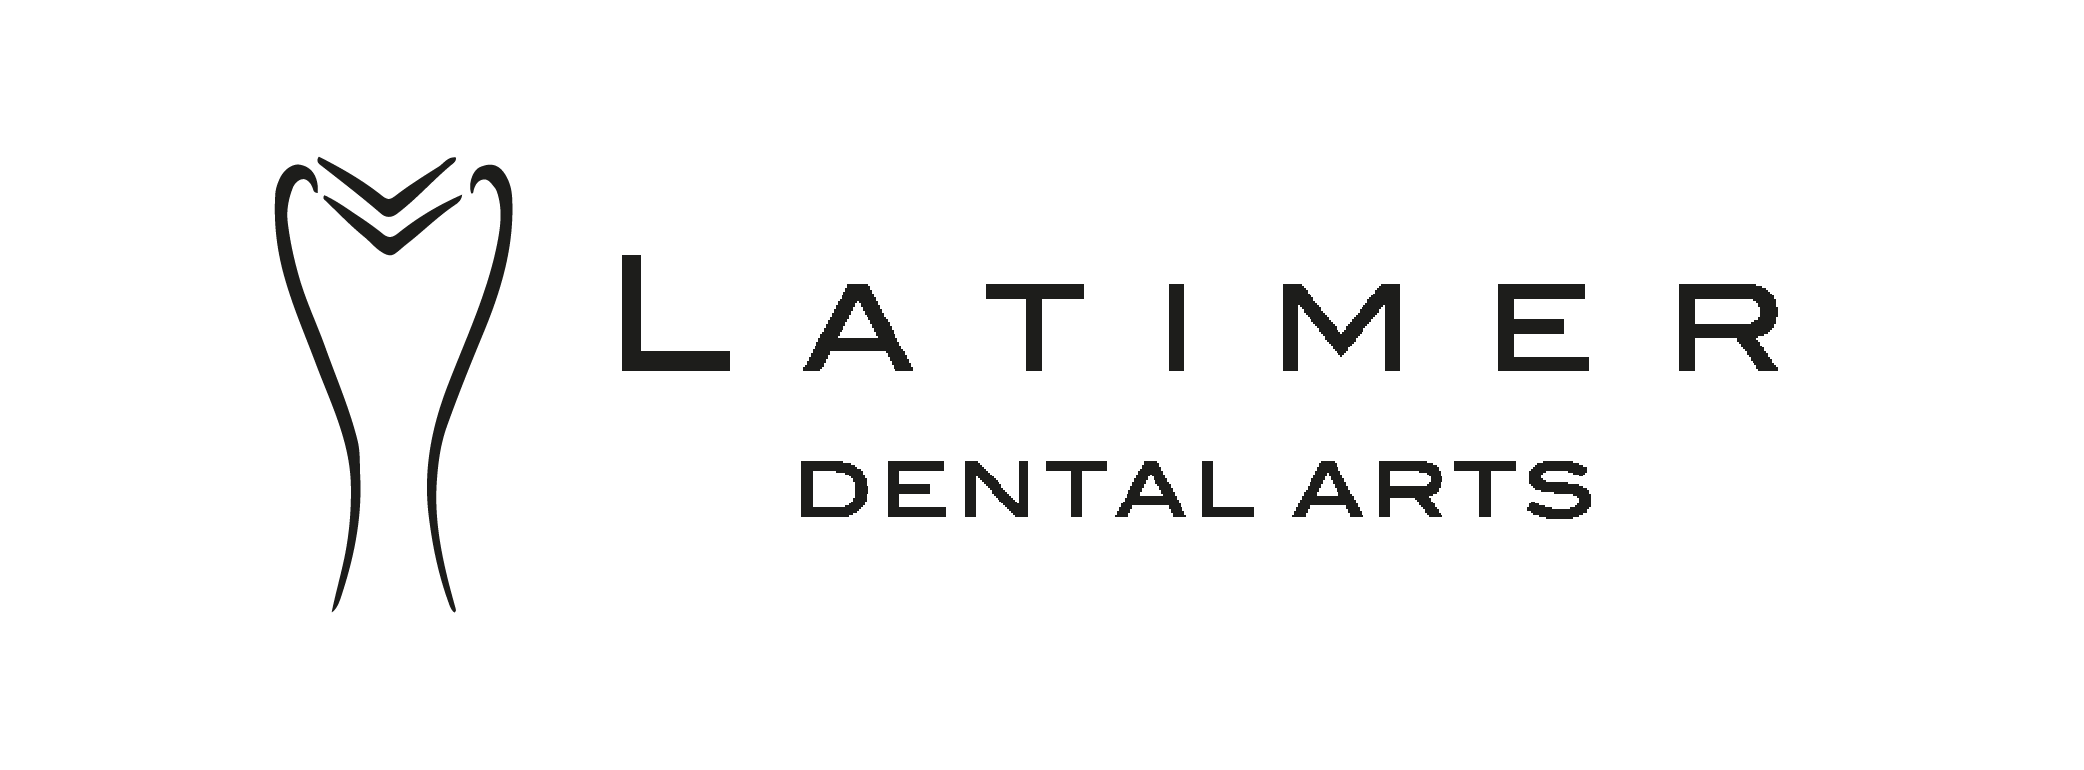 Latimer_Dental_Arts_Logo